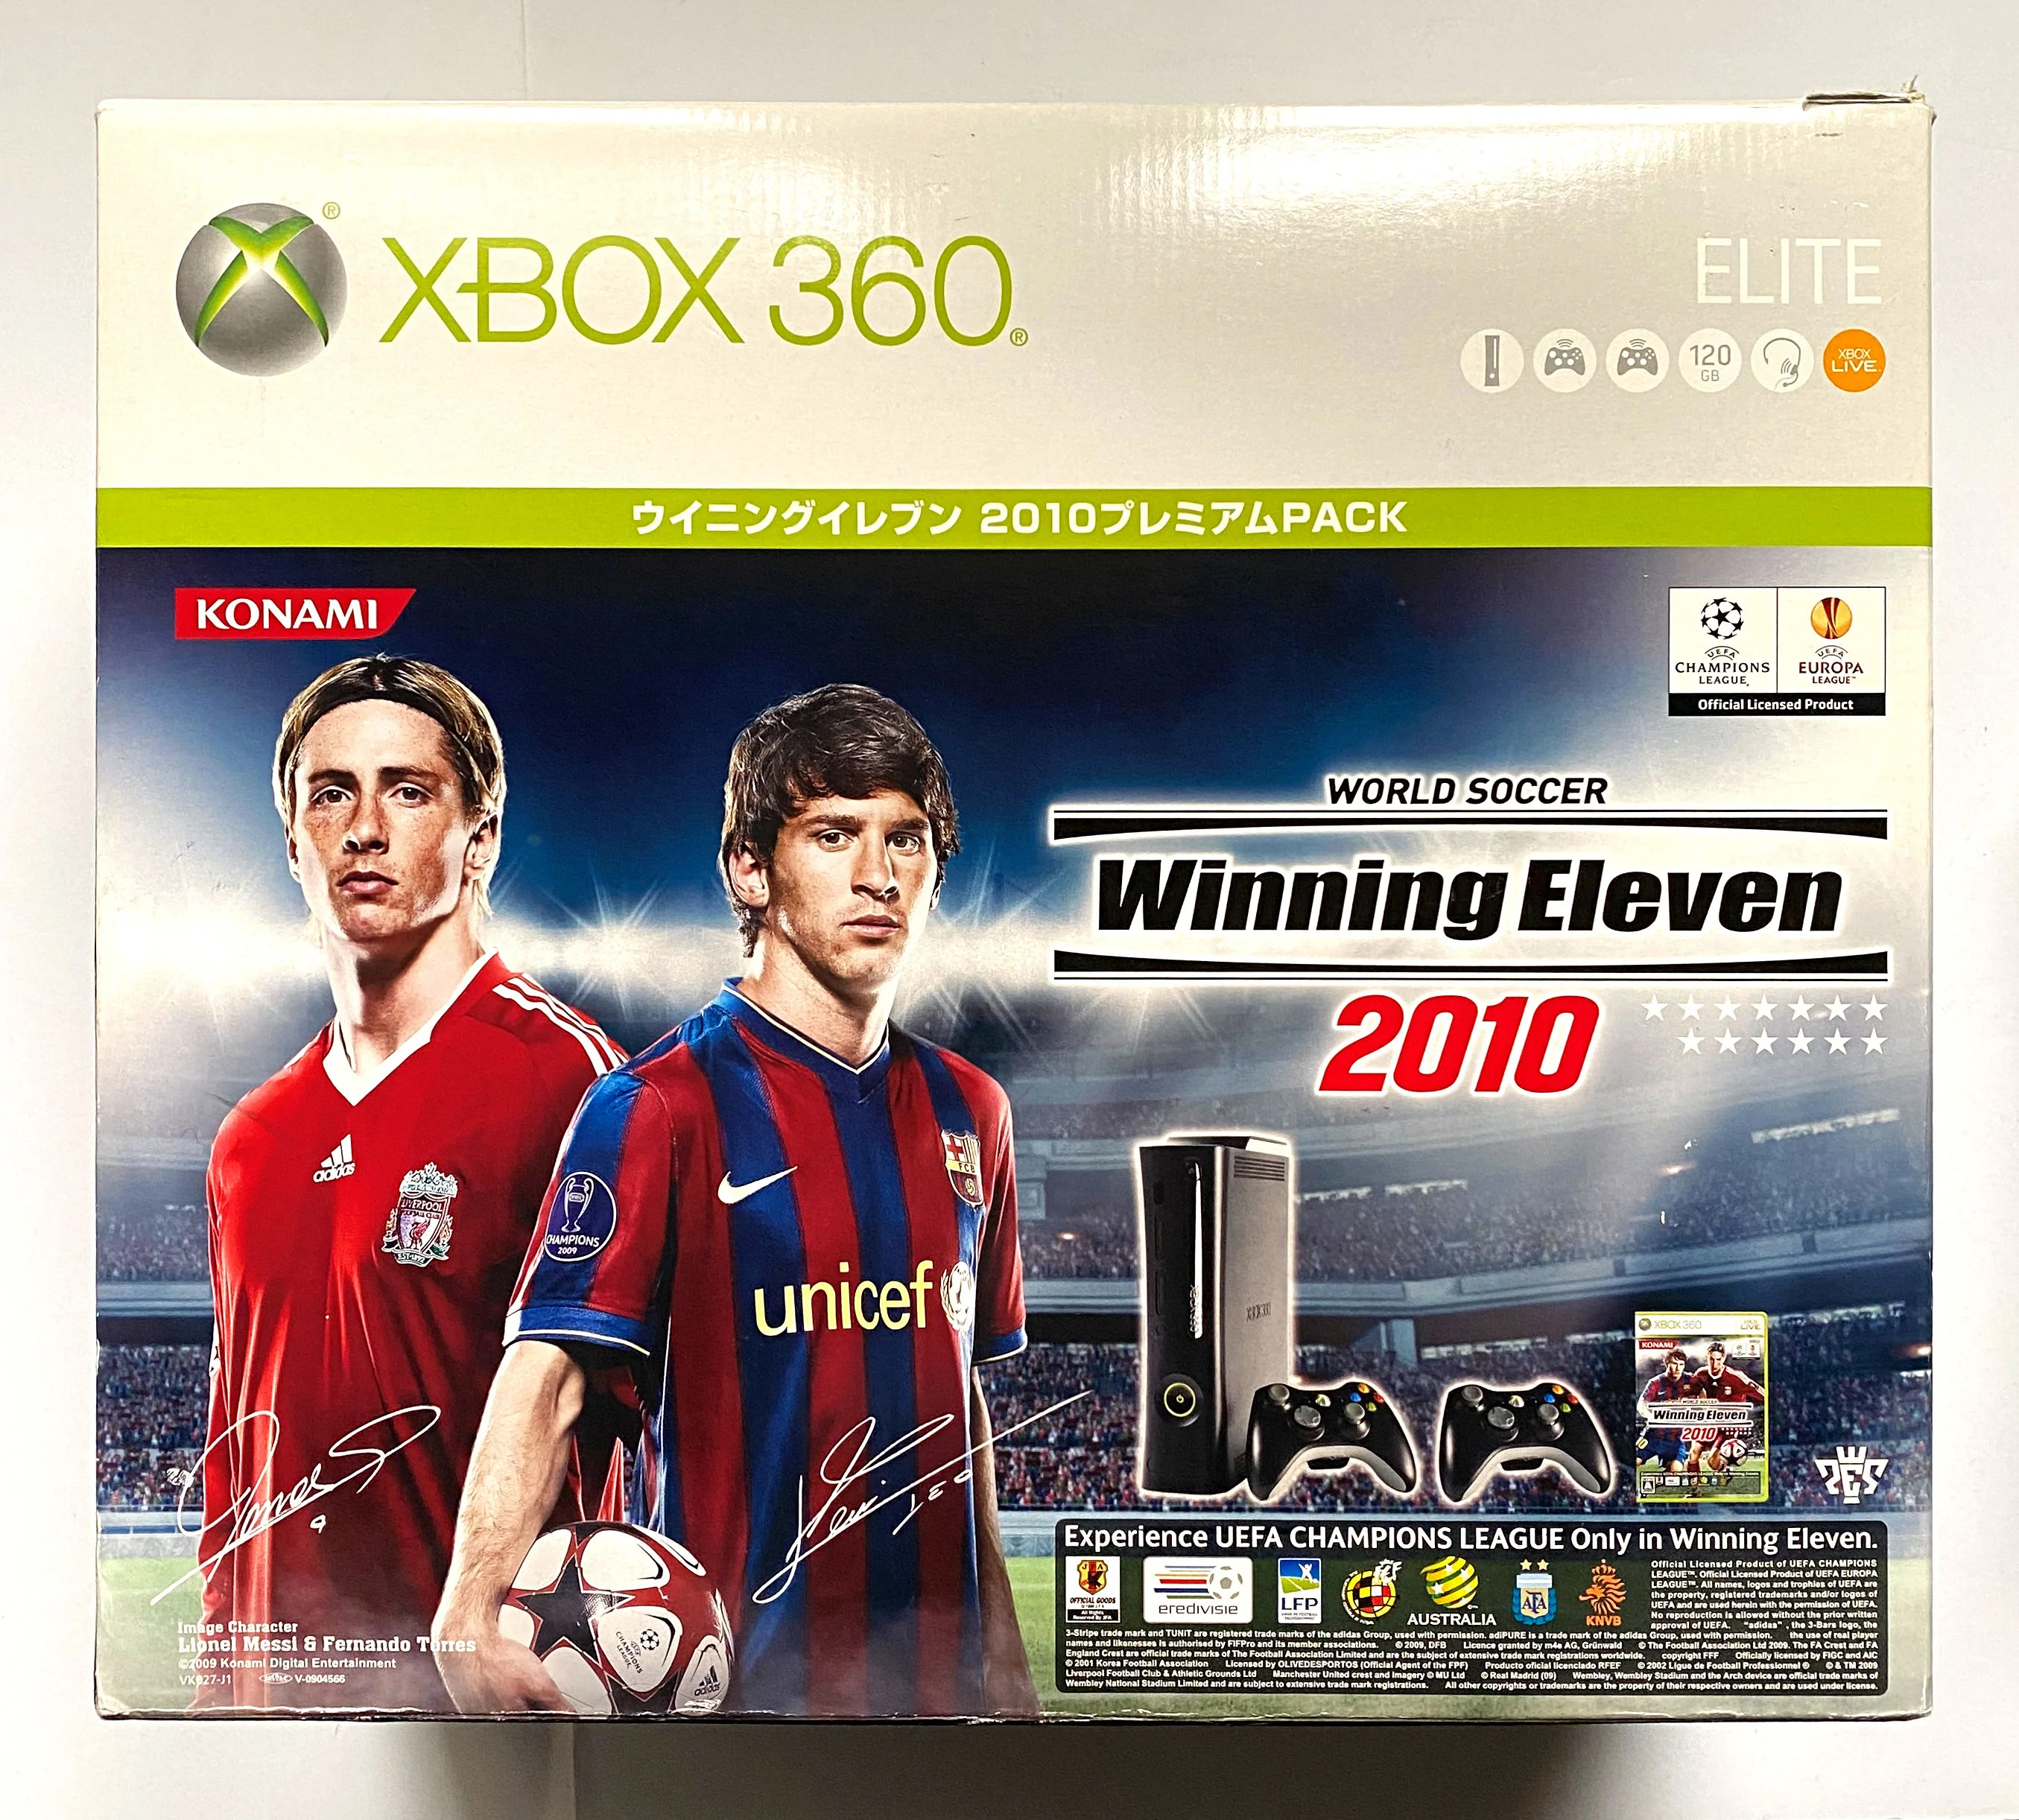  Microsoft Xbox 360 Elite Winning Eleven 2010 PES Bundle